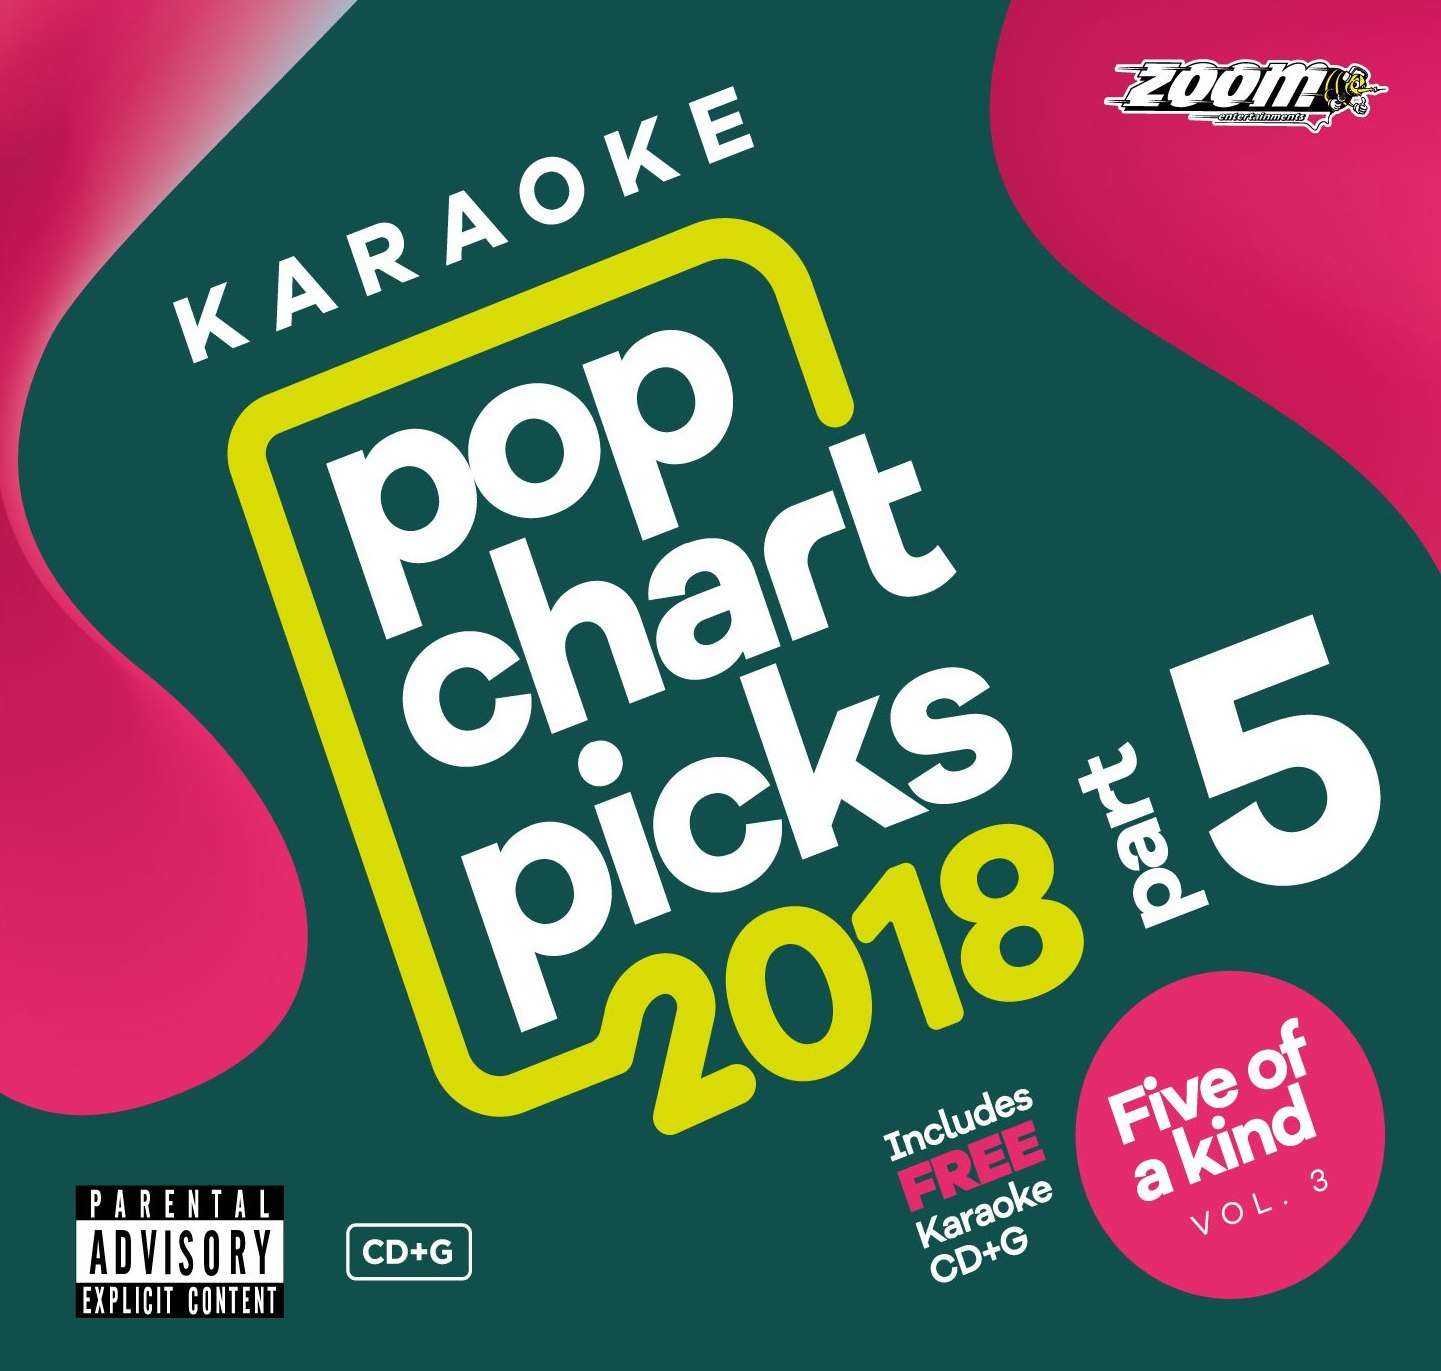 Zoom Karaoke ZPCP2018V - Pop Chart Picks 2018 - Part 5